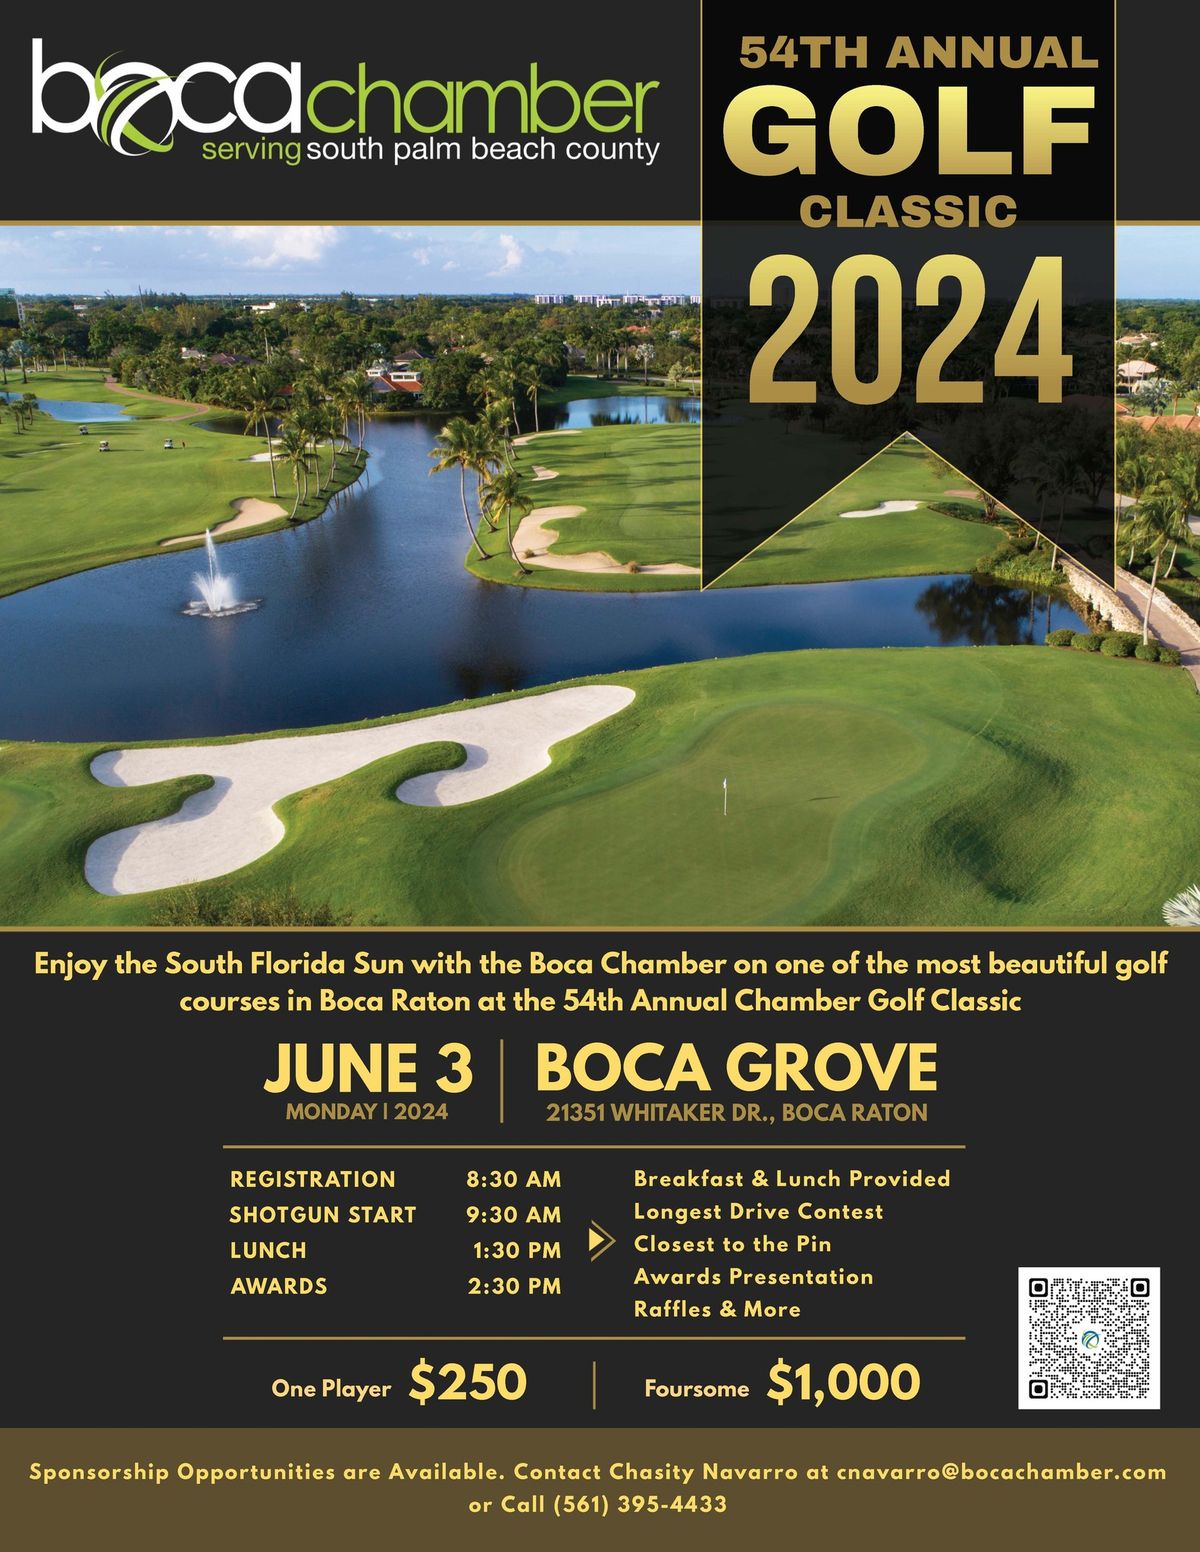 Boca Chamber's 54th Annual Golf Classic